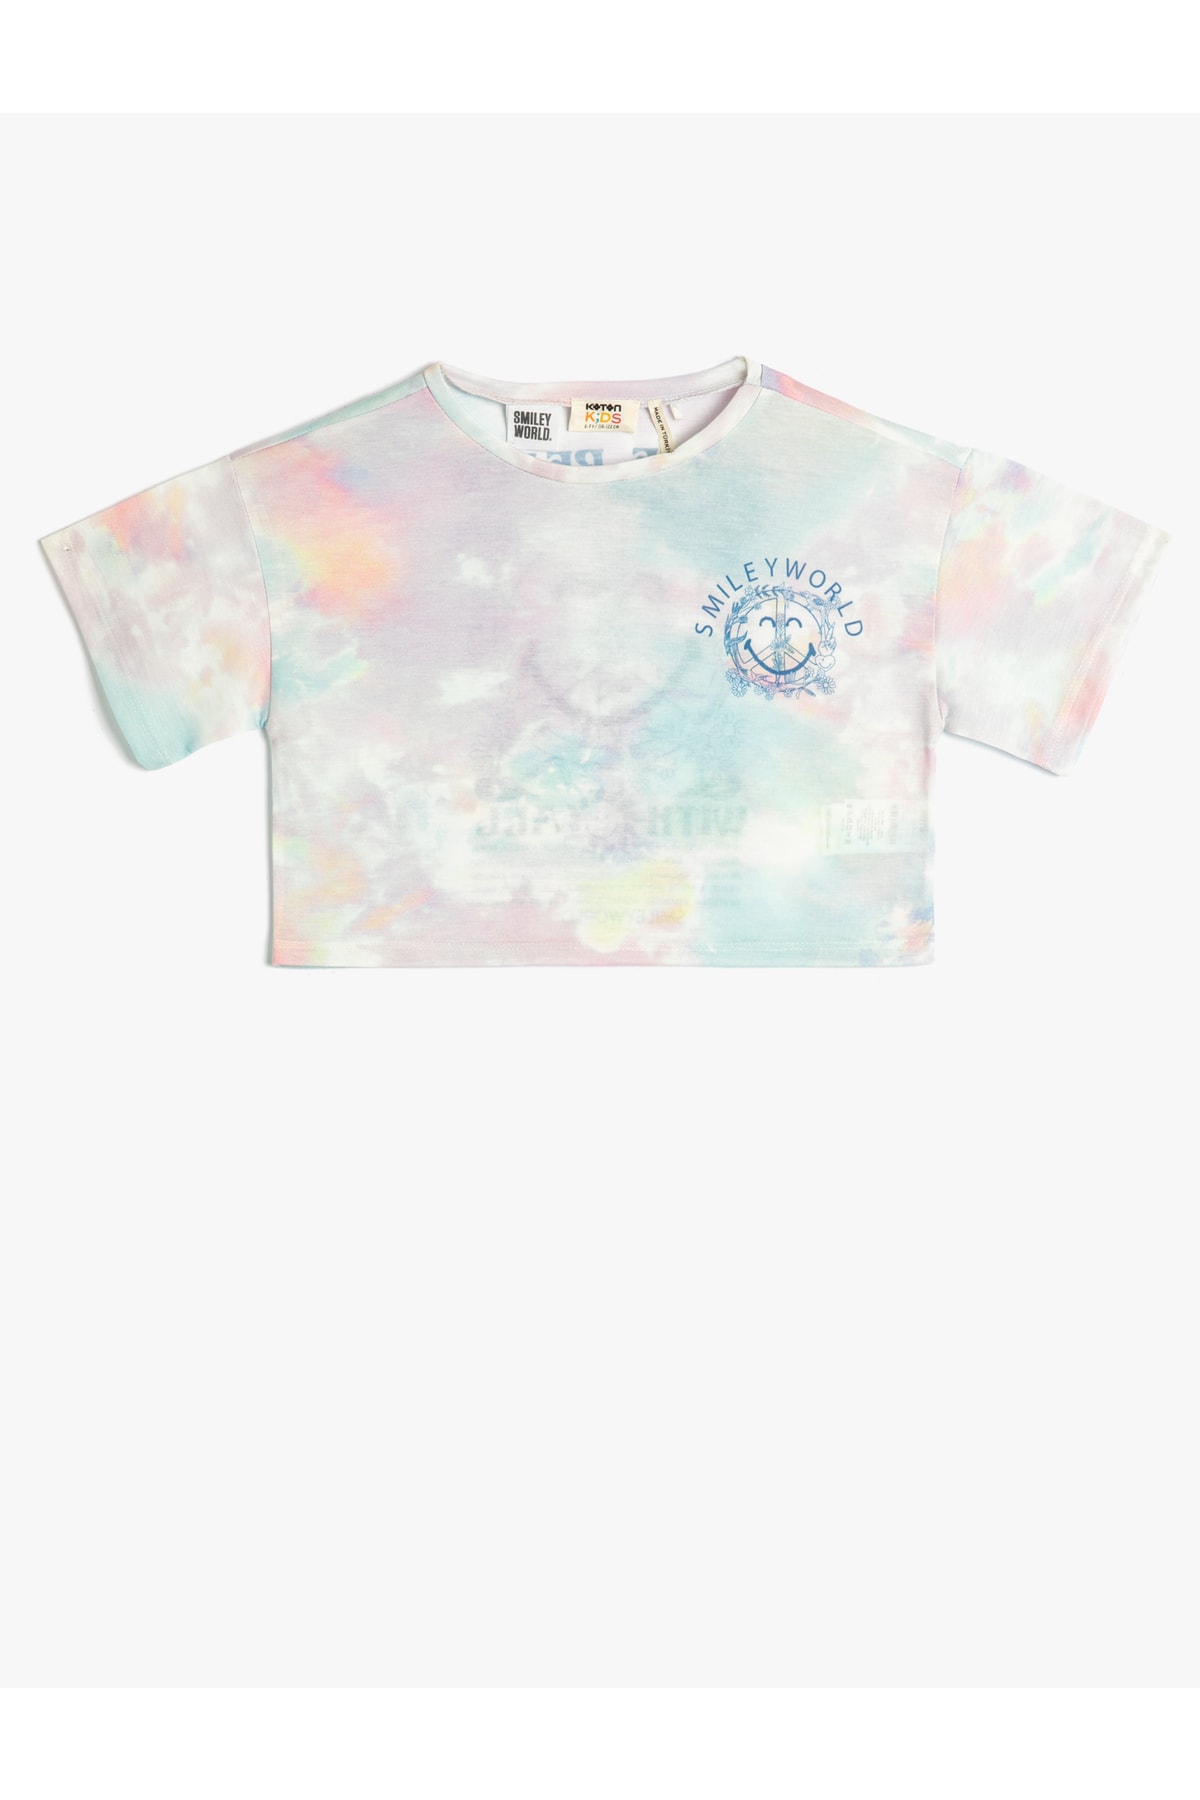 Koton Printed on the Back Smileyworld® T-Shirt Licensed, Tie-Dye Patterned